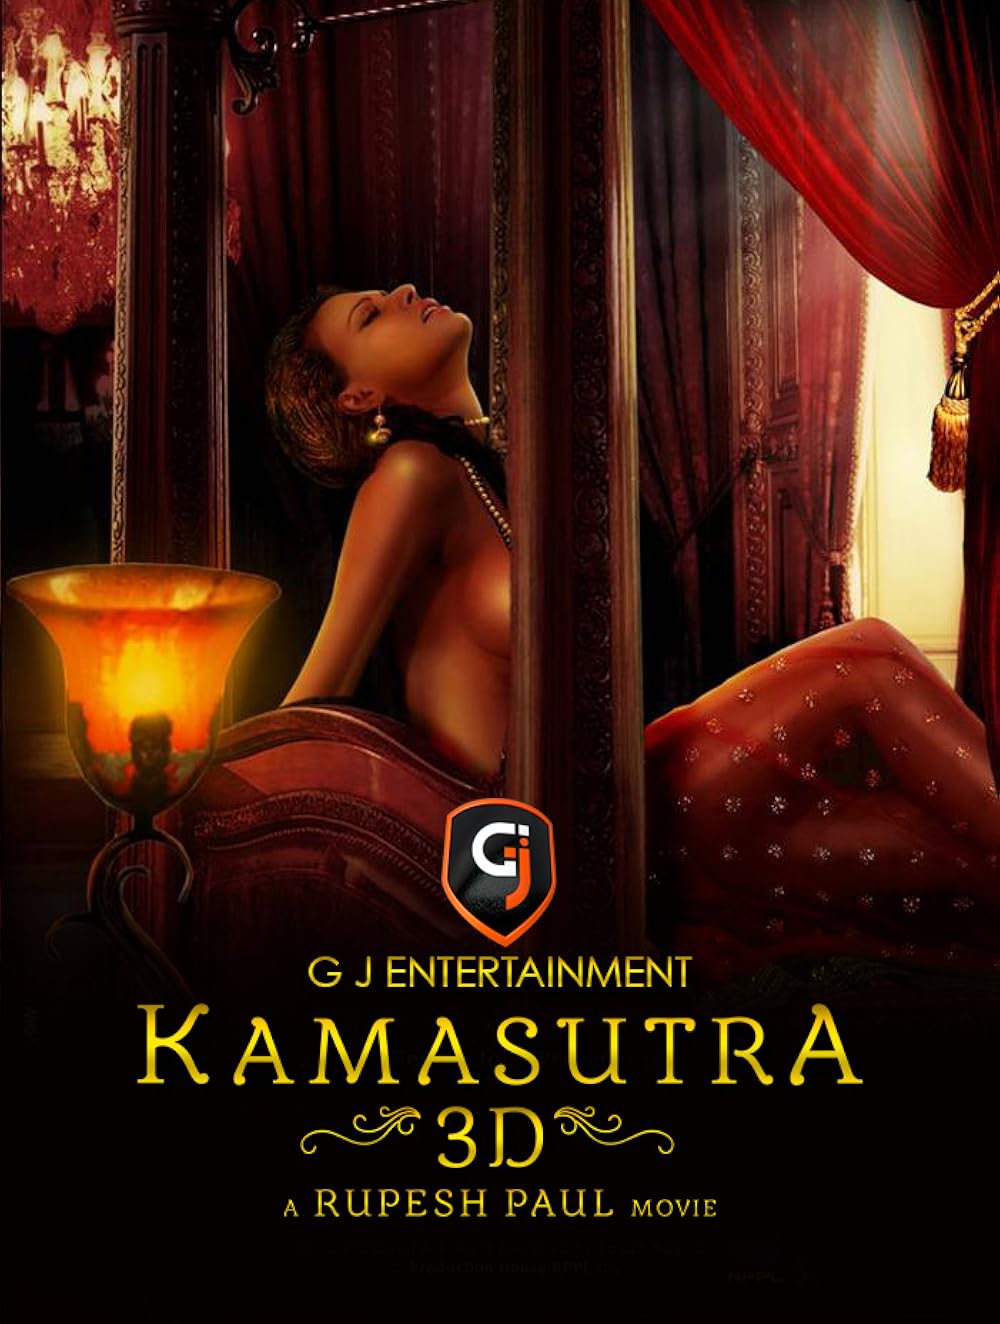 debra phelan recommends Kamasutra 3d On Netflix